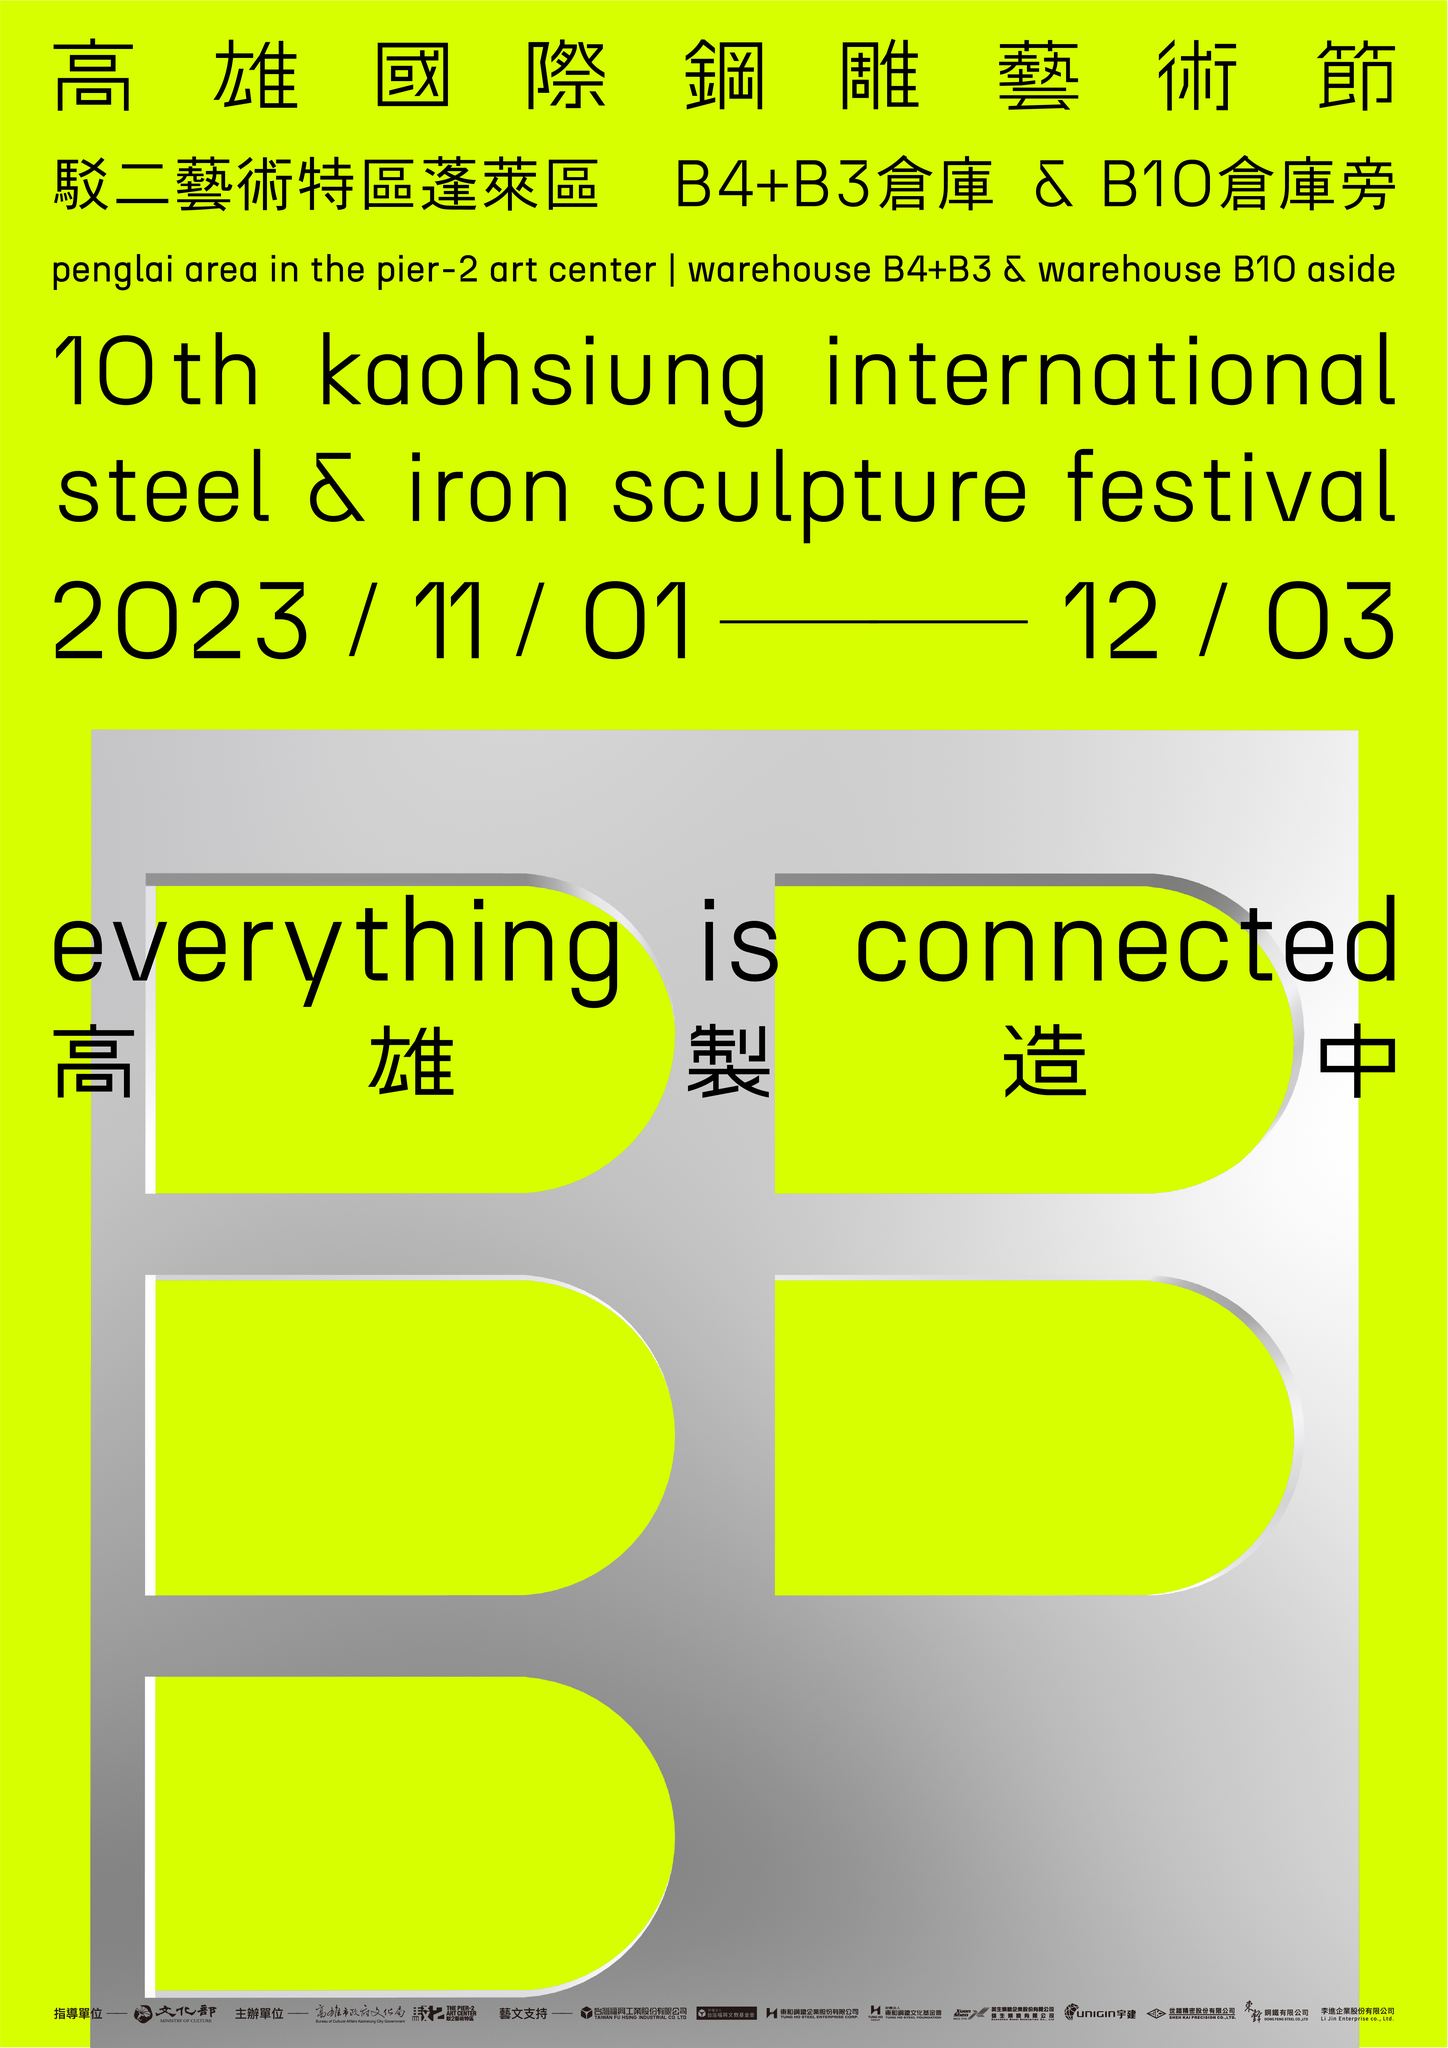 《everything is connected 高雄制造中》2023高雄国际钢雕艺术节